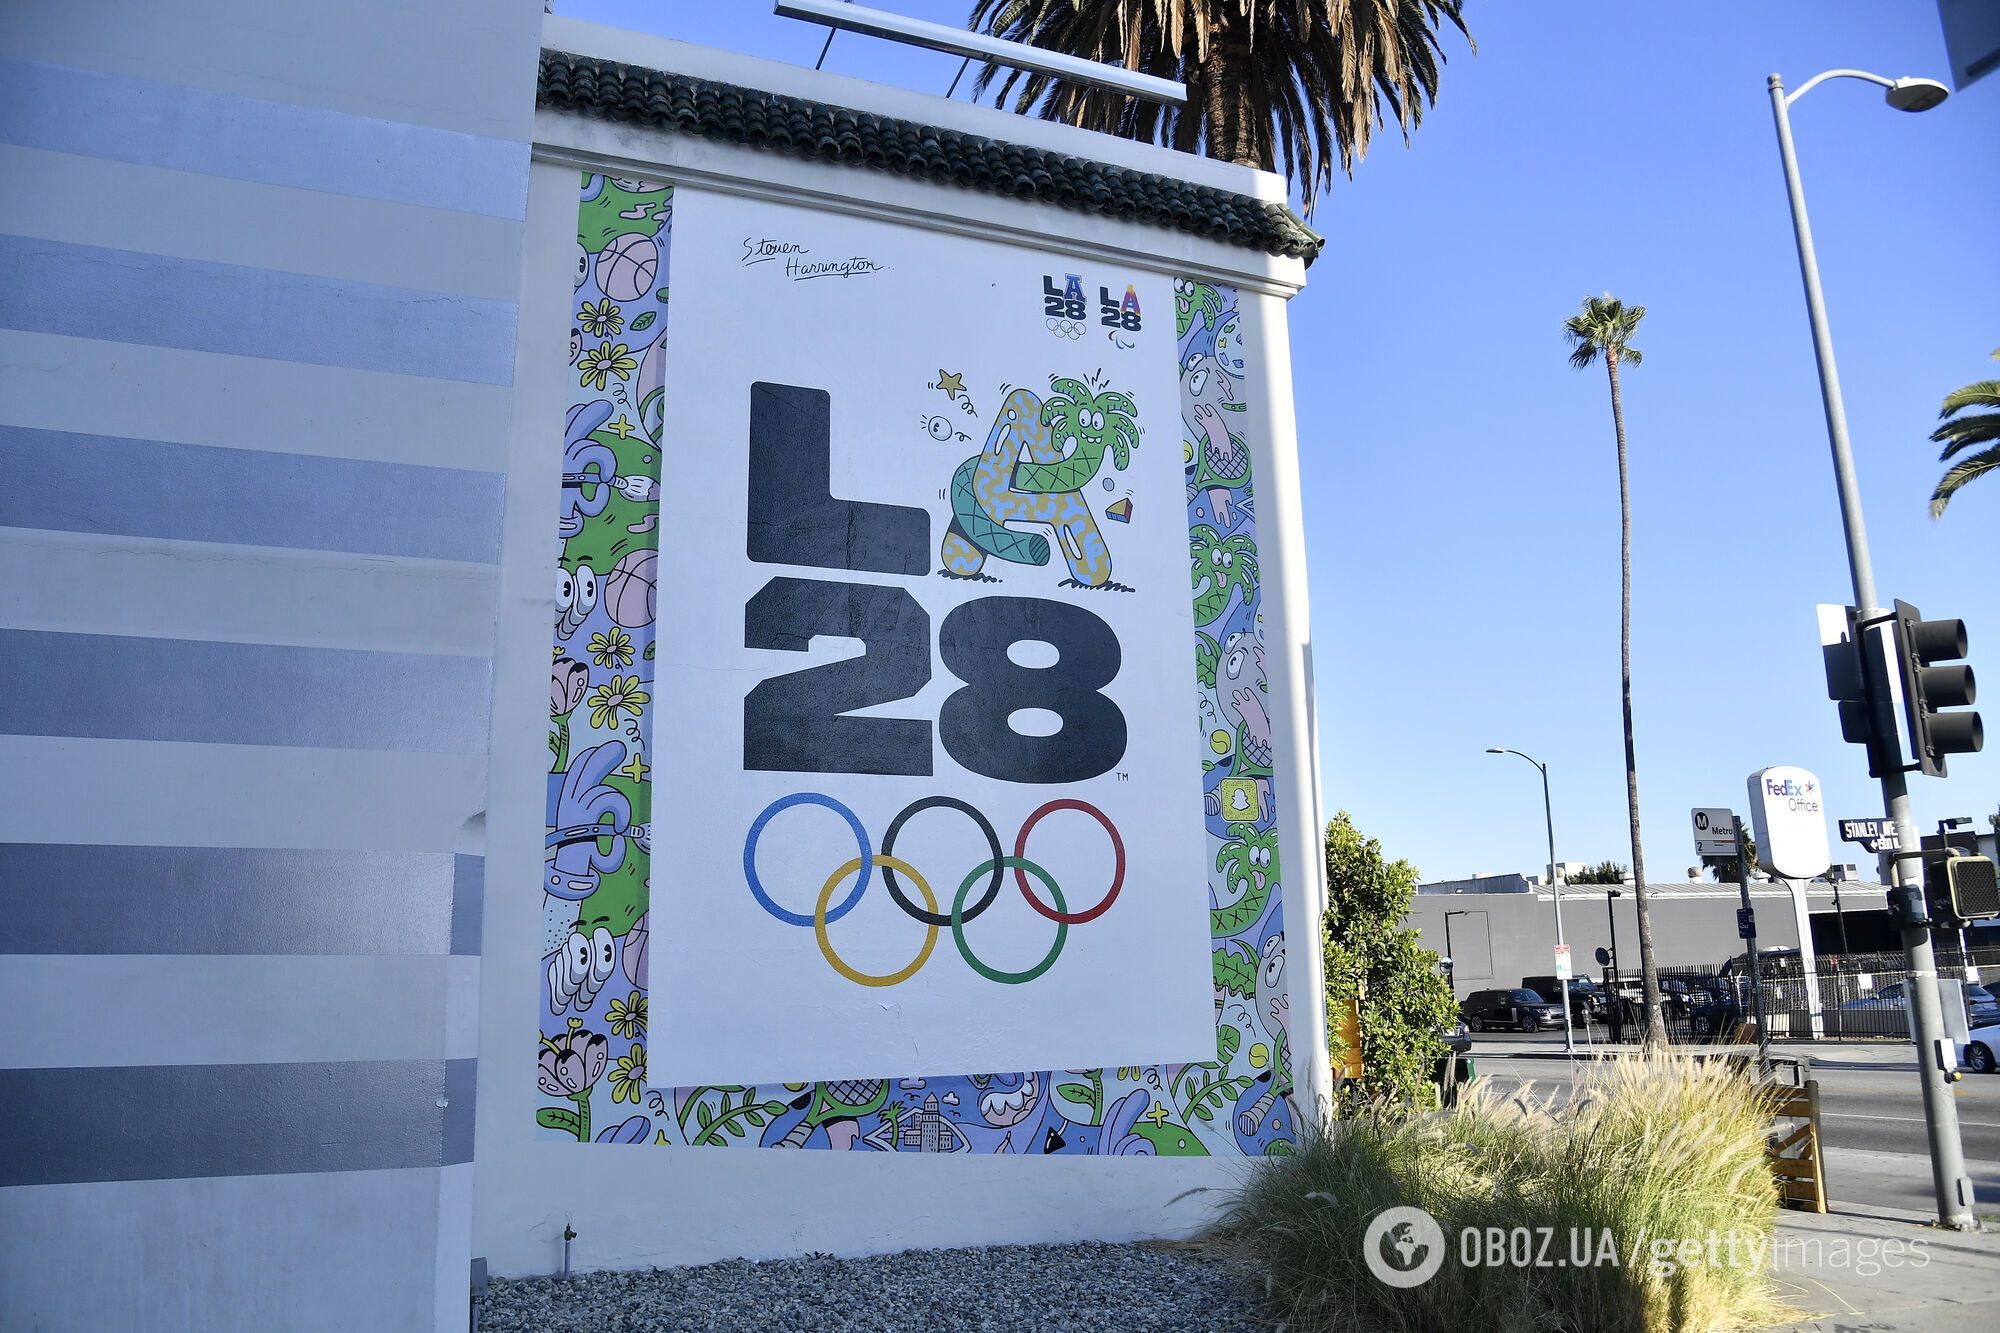 Олімпіада-2028 пройде у Лос-Анджелесі.